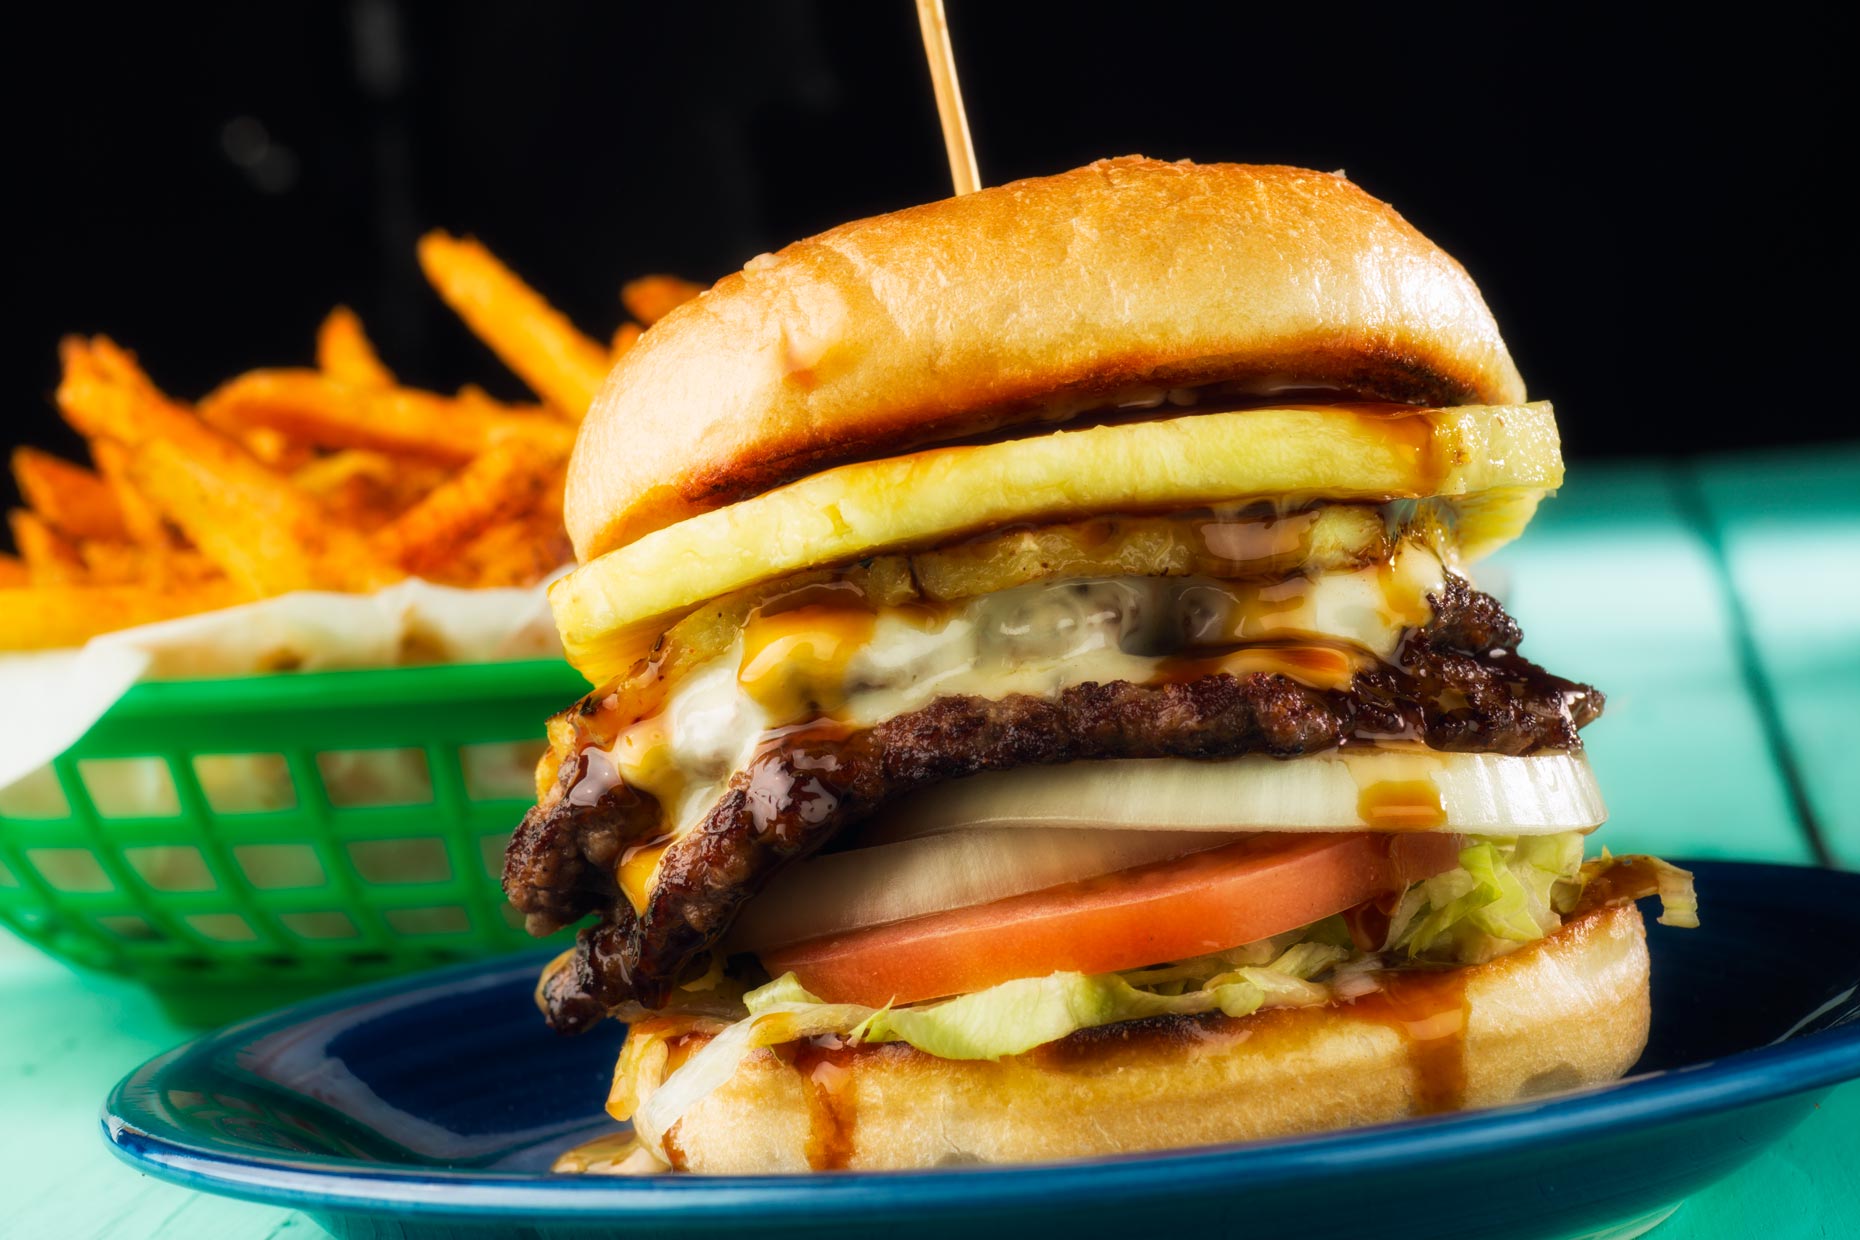  Orlando Food Photographer | Cheeseburger & Fries 